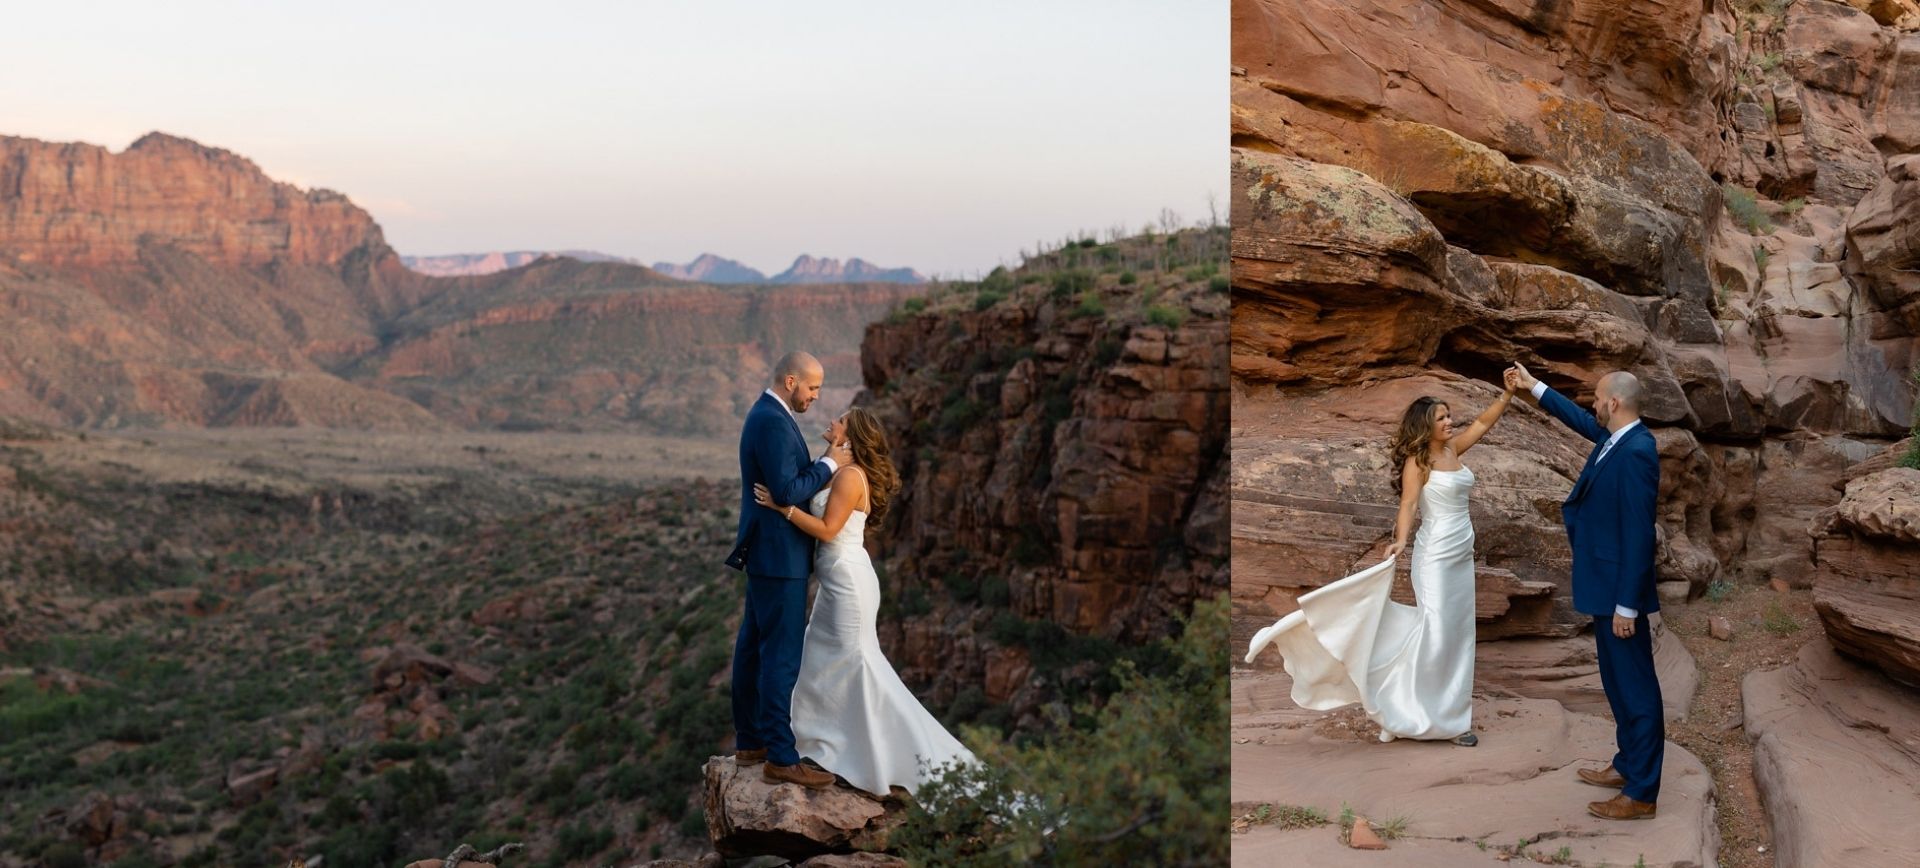 zion national park wedding in Utah - wedding portraits in the mountain desert